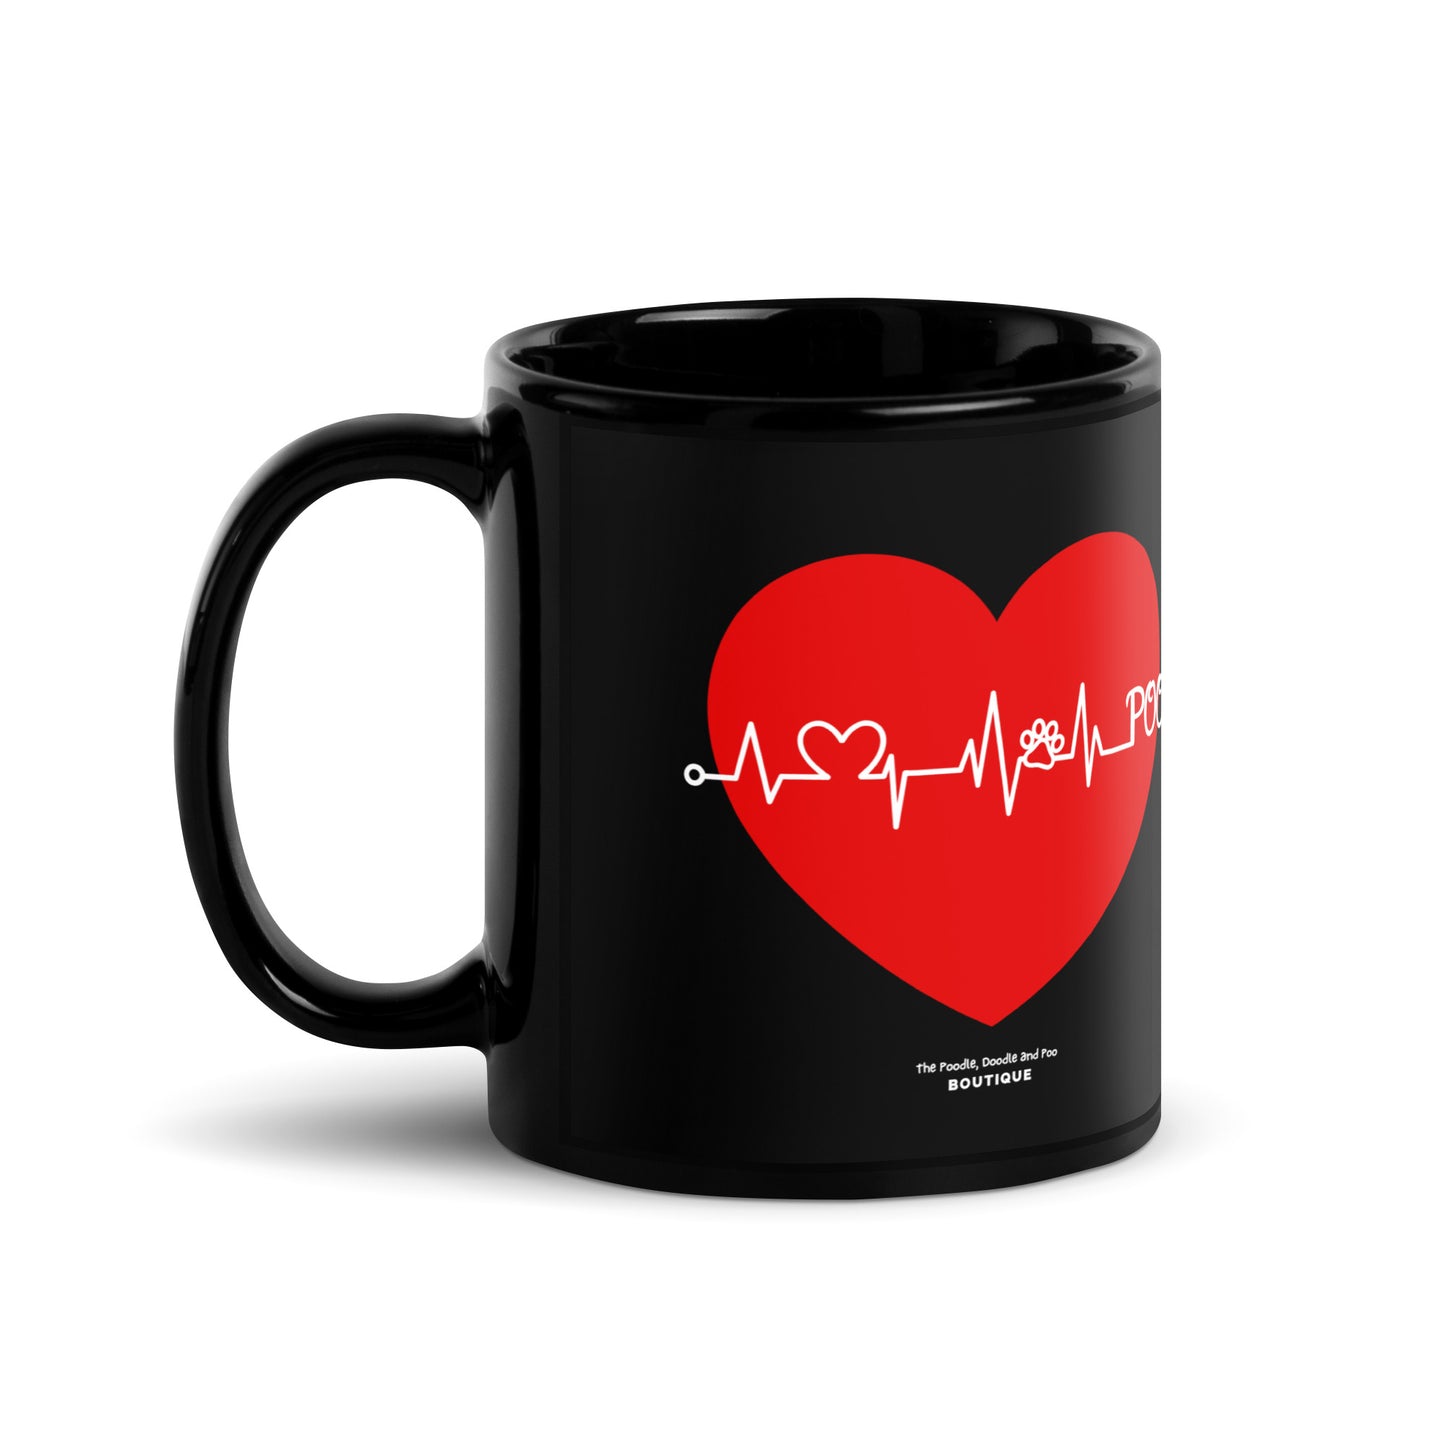 "Heartbeat" Poo Black Glossy Mug